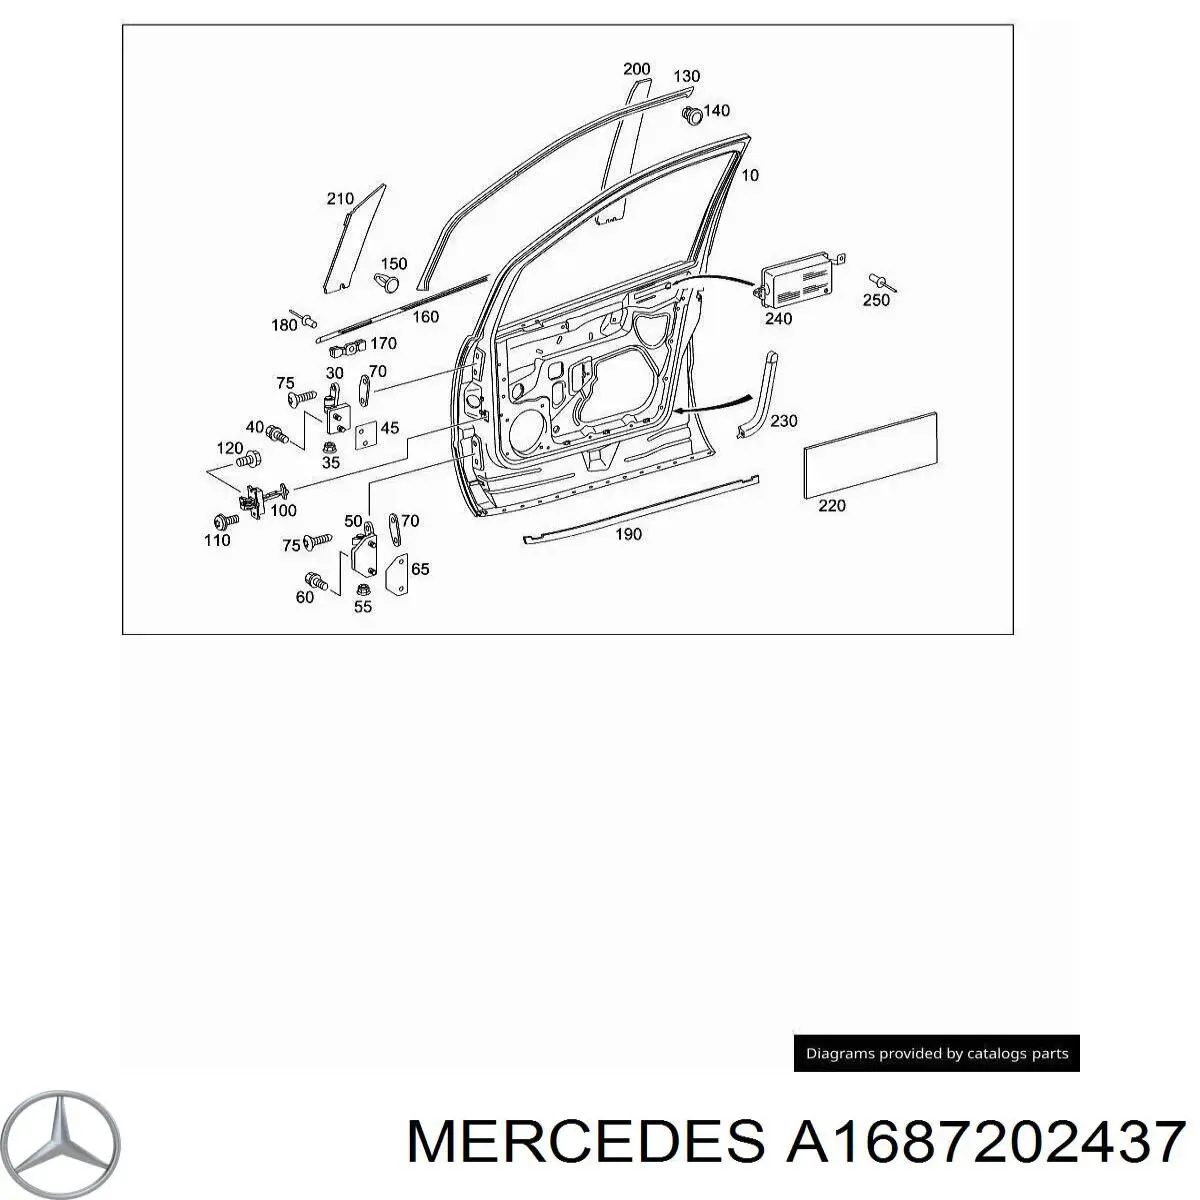 A1687202437 Mercedes bisagra de puerta delantera derecha